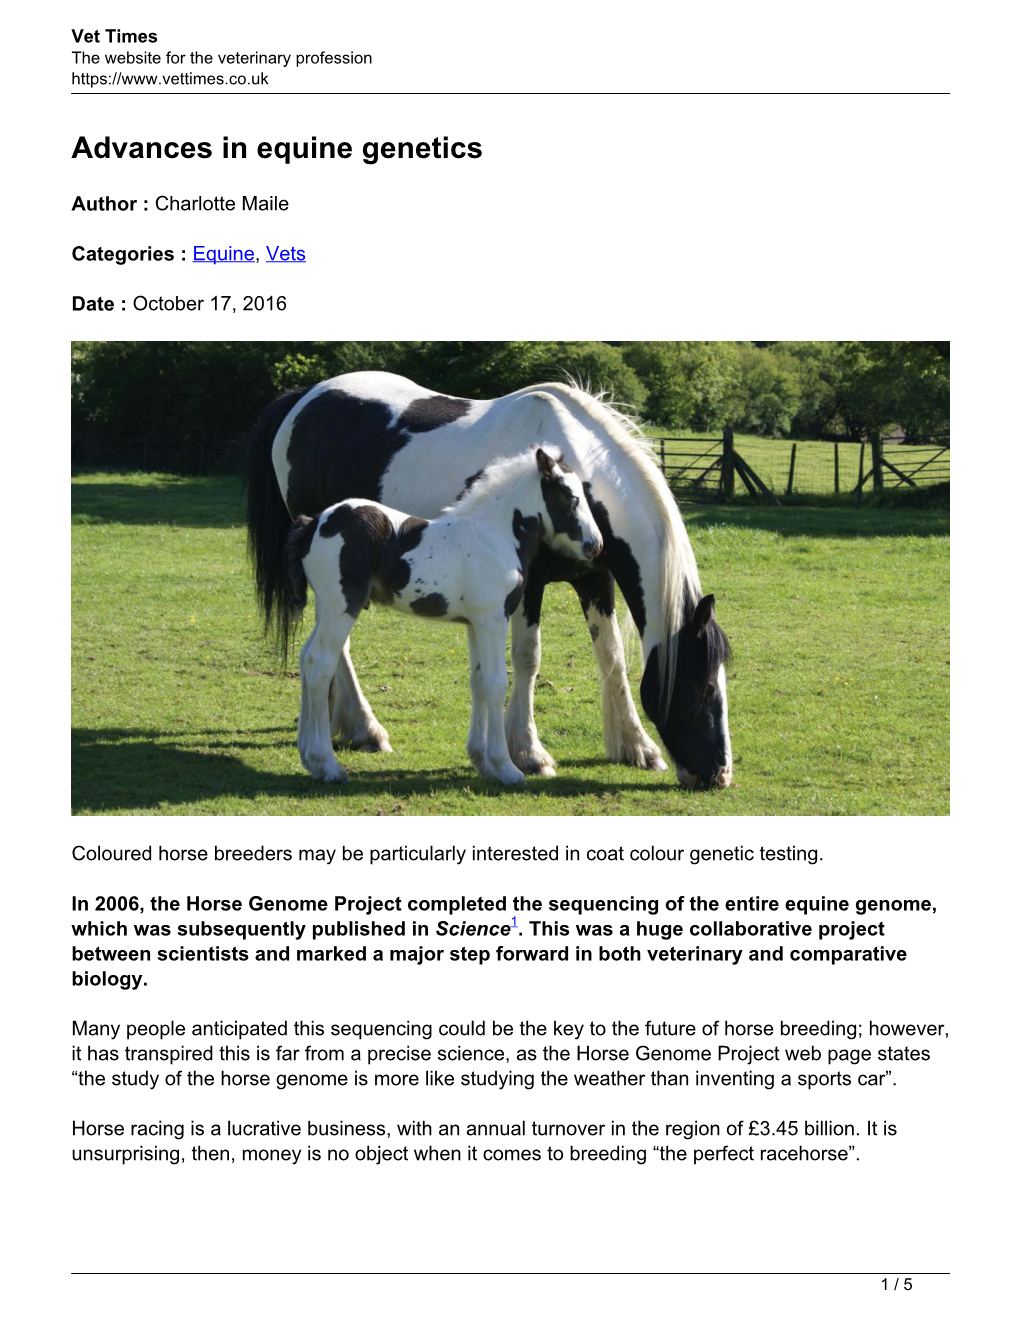 Advances in Equine Genetics